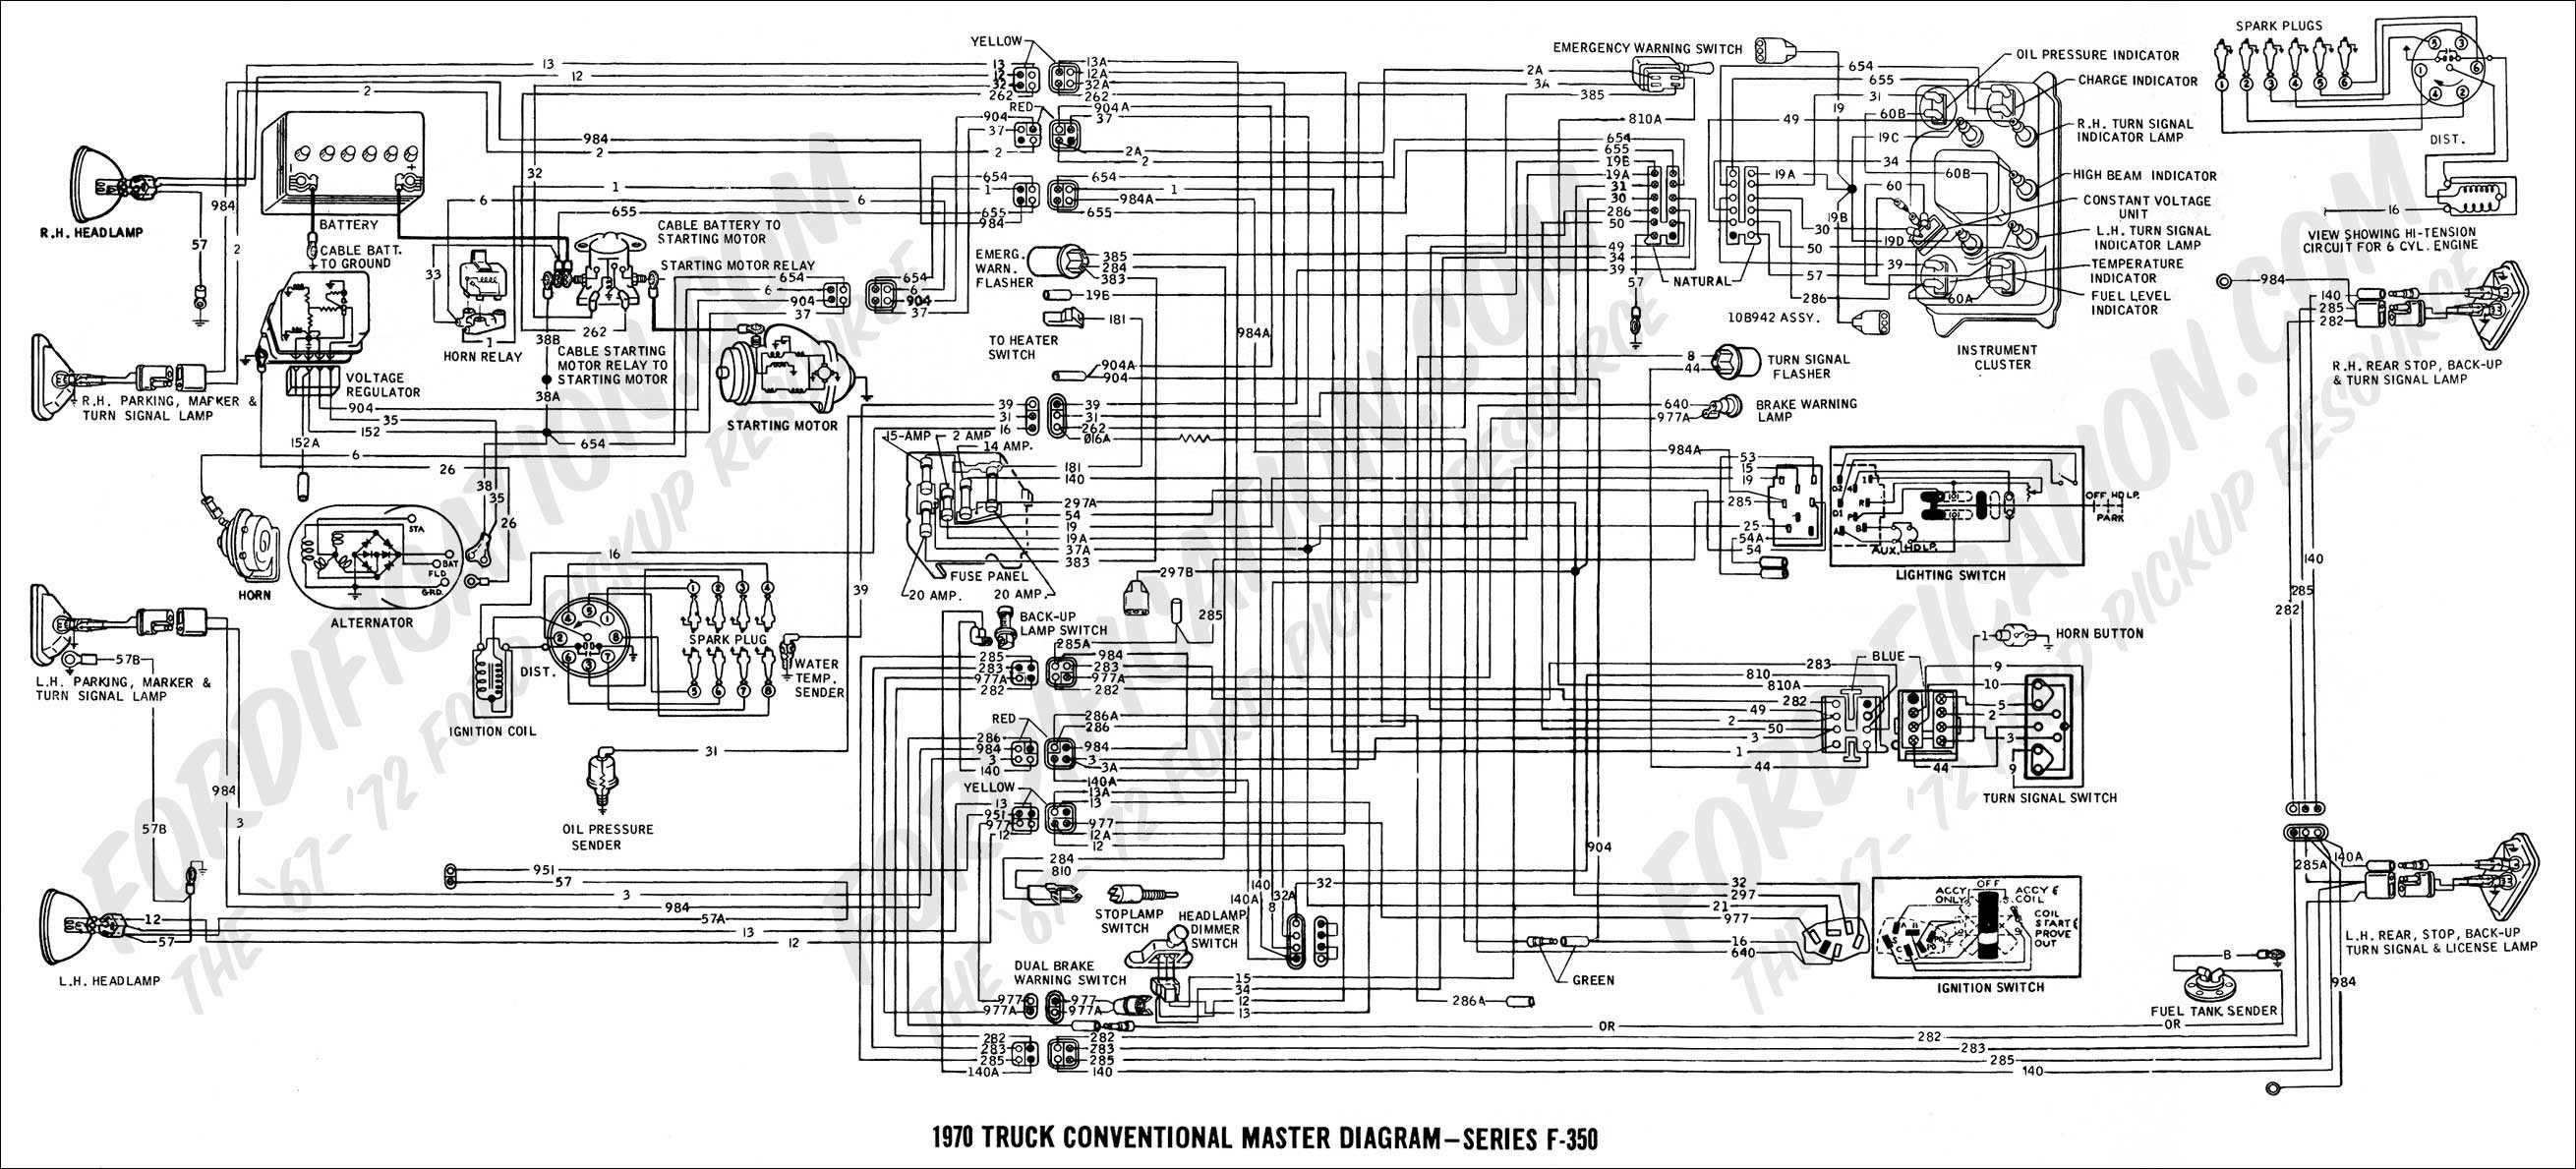 1977 Ford F150 Wiring Diagram from detoxicrecenze.com